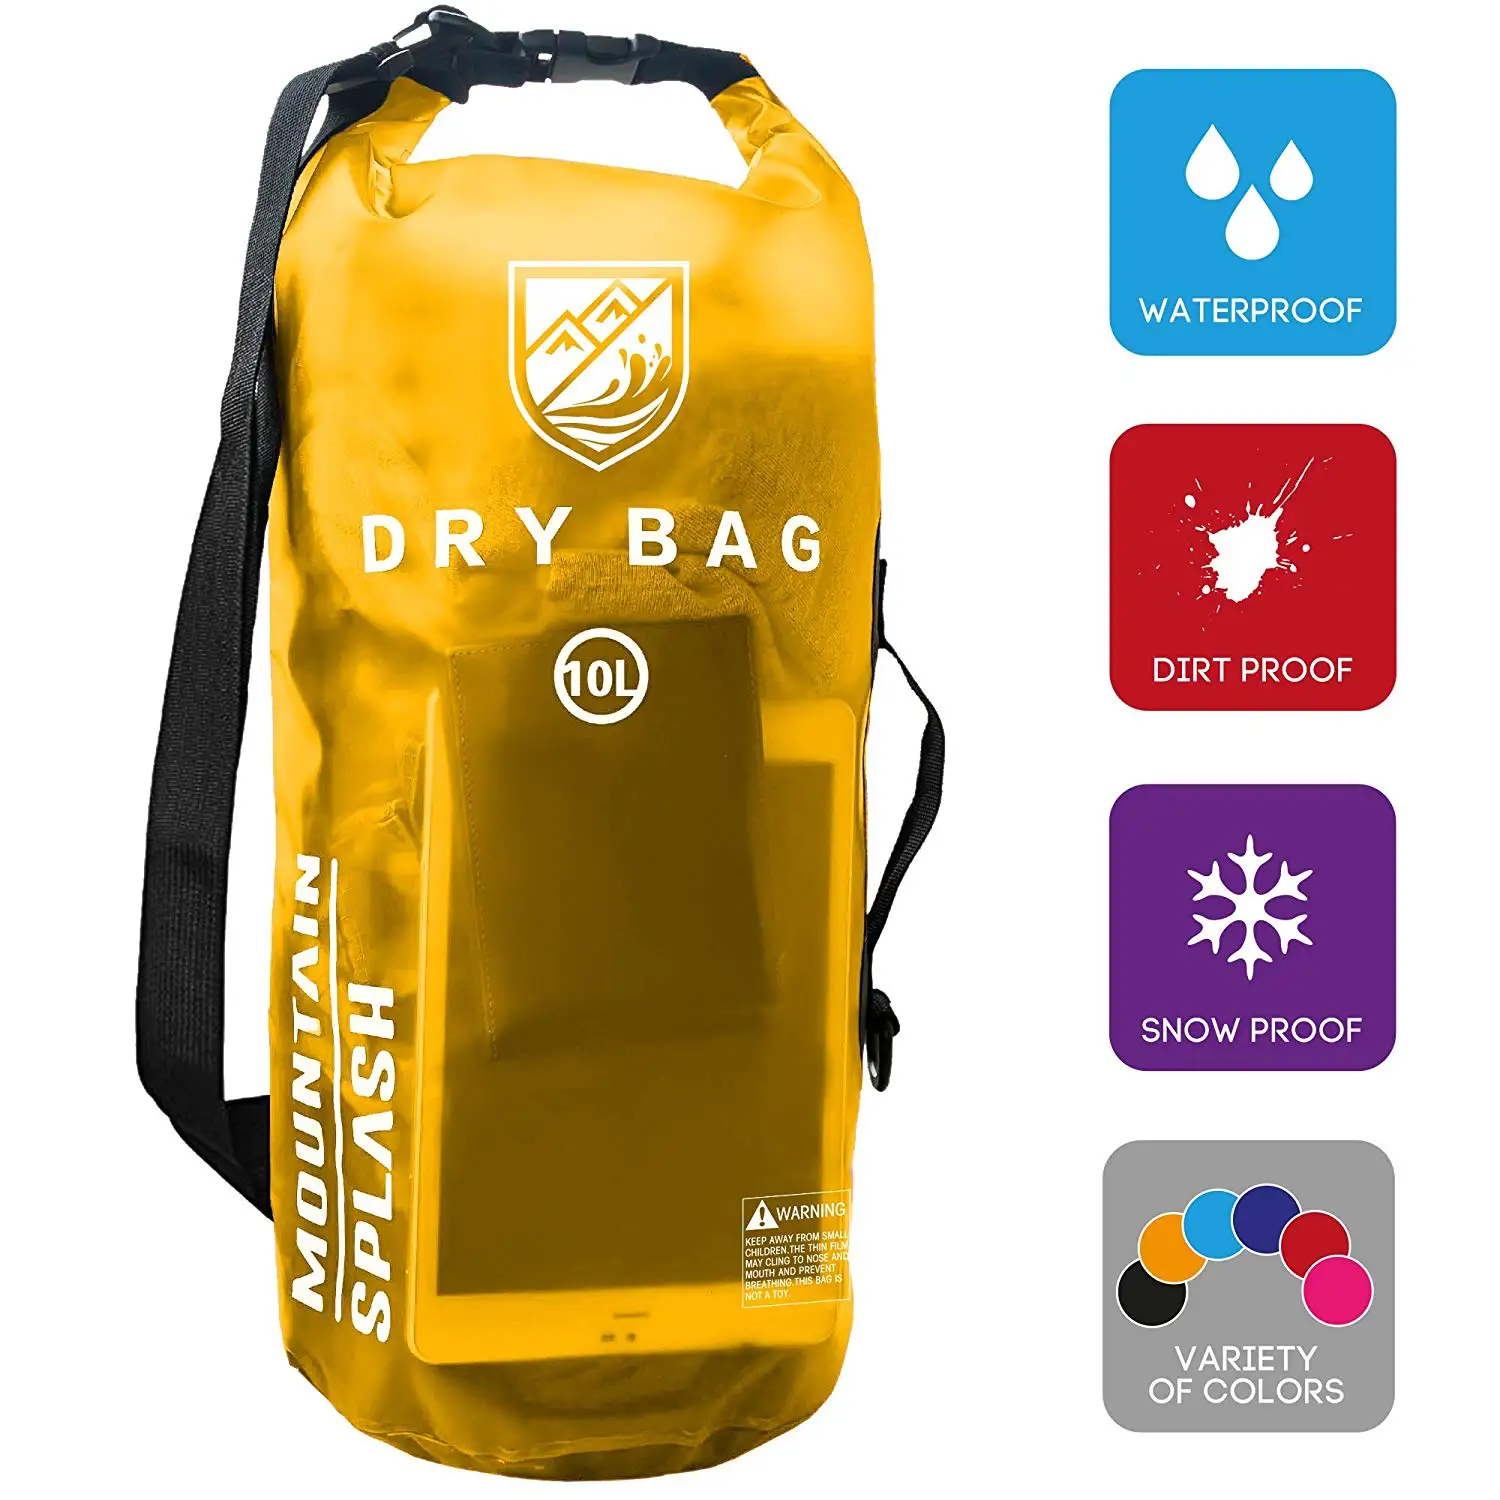 Evergreen Dry Bag Waterproof Roll Top Sack Keeps Gear Dry 10L 20L 30L